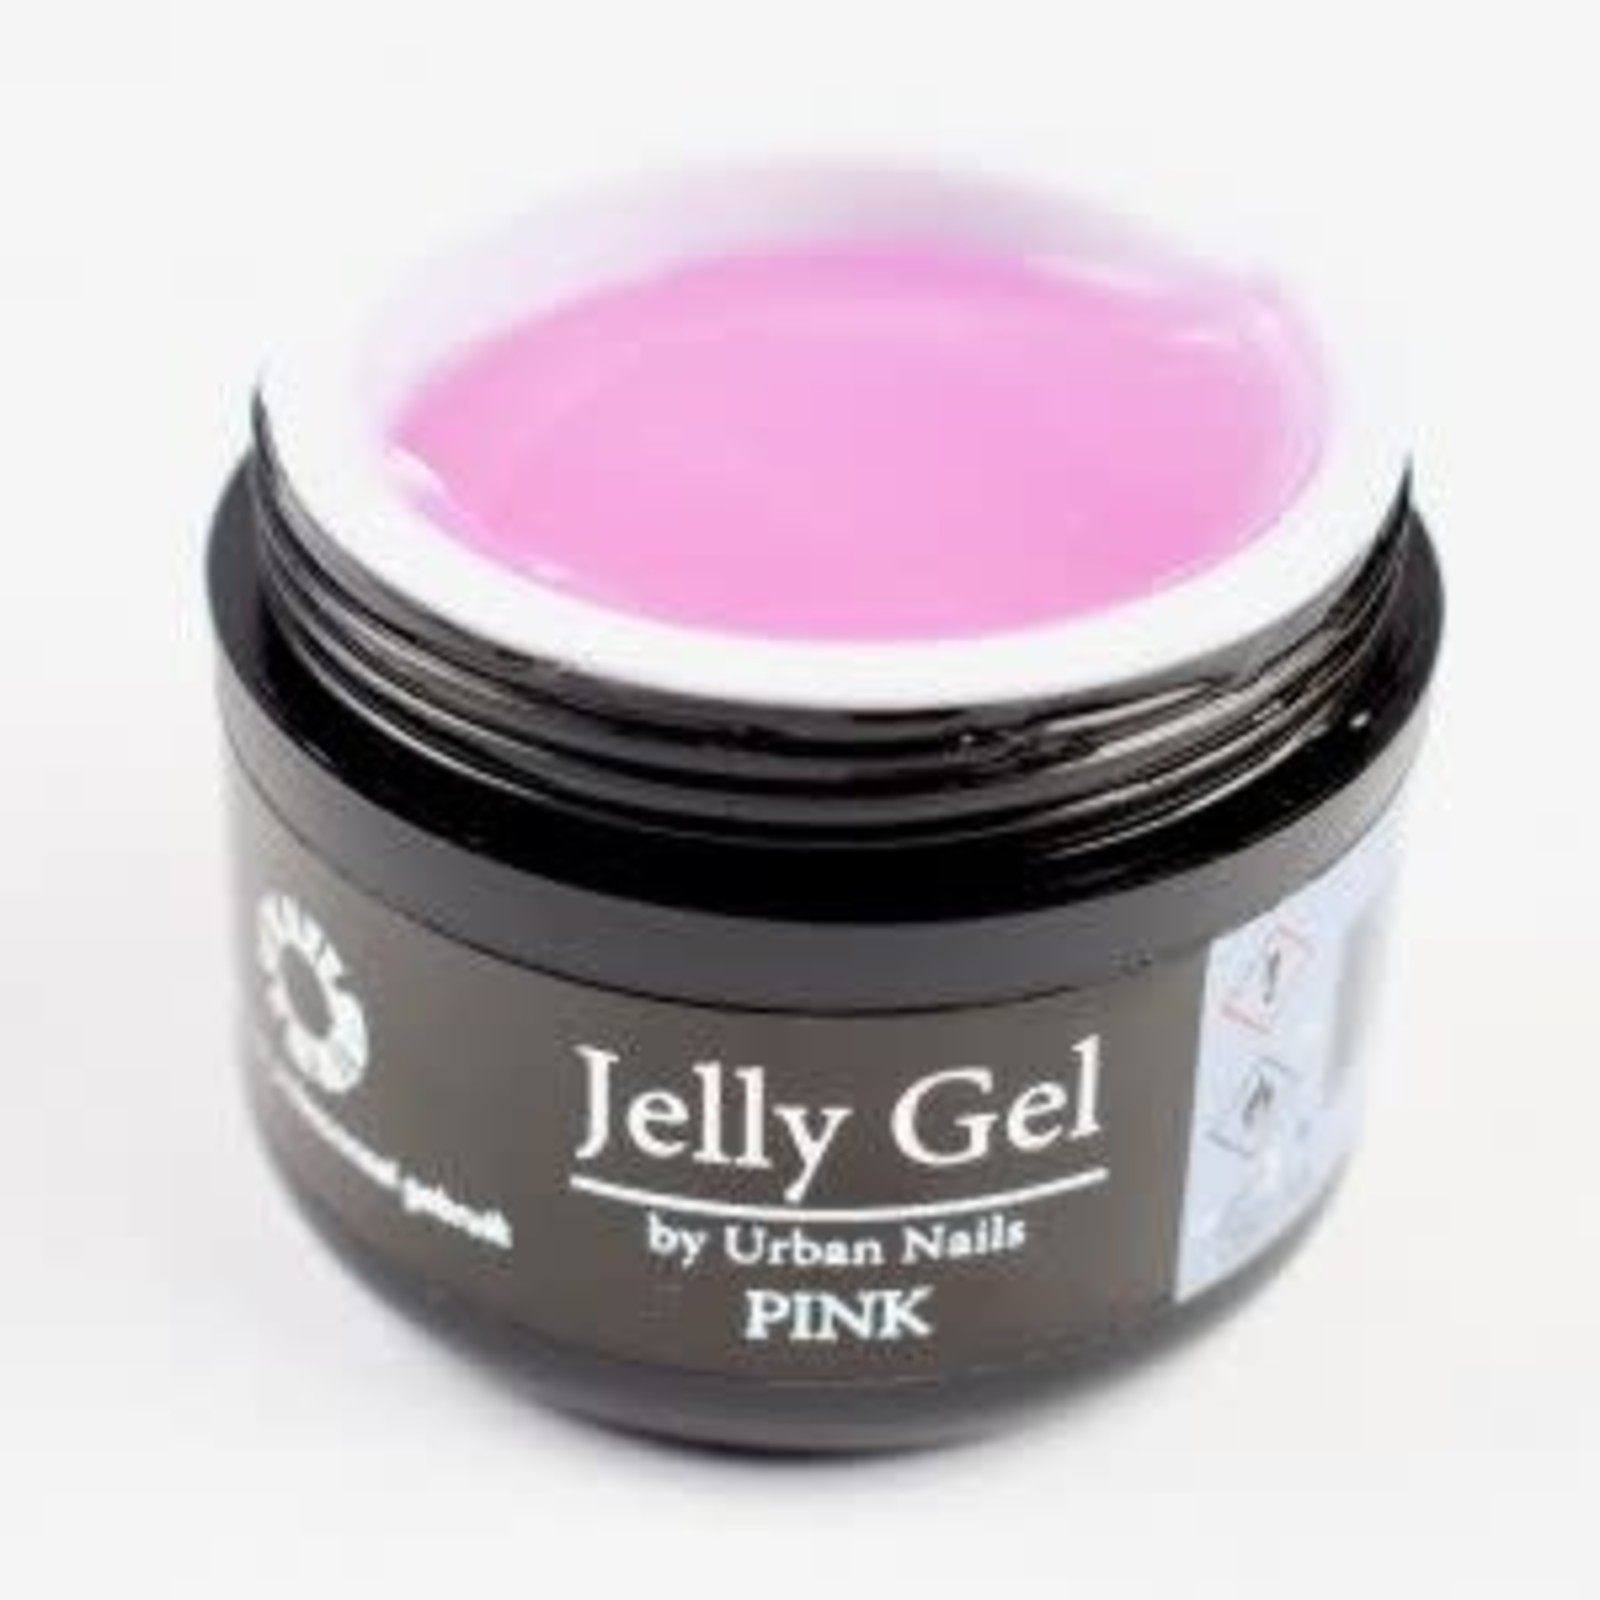 Urban nails Jelly gel pink 50 gr